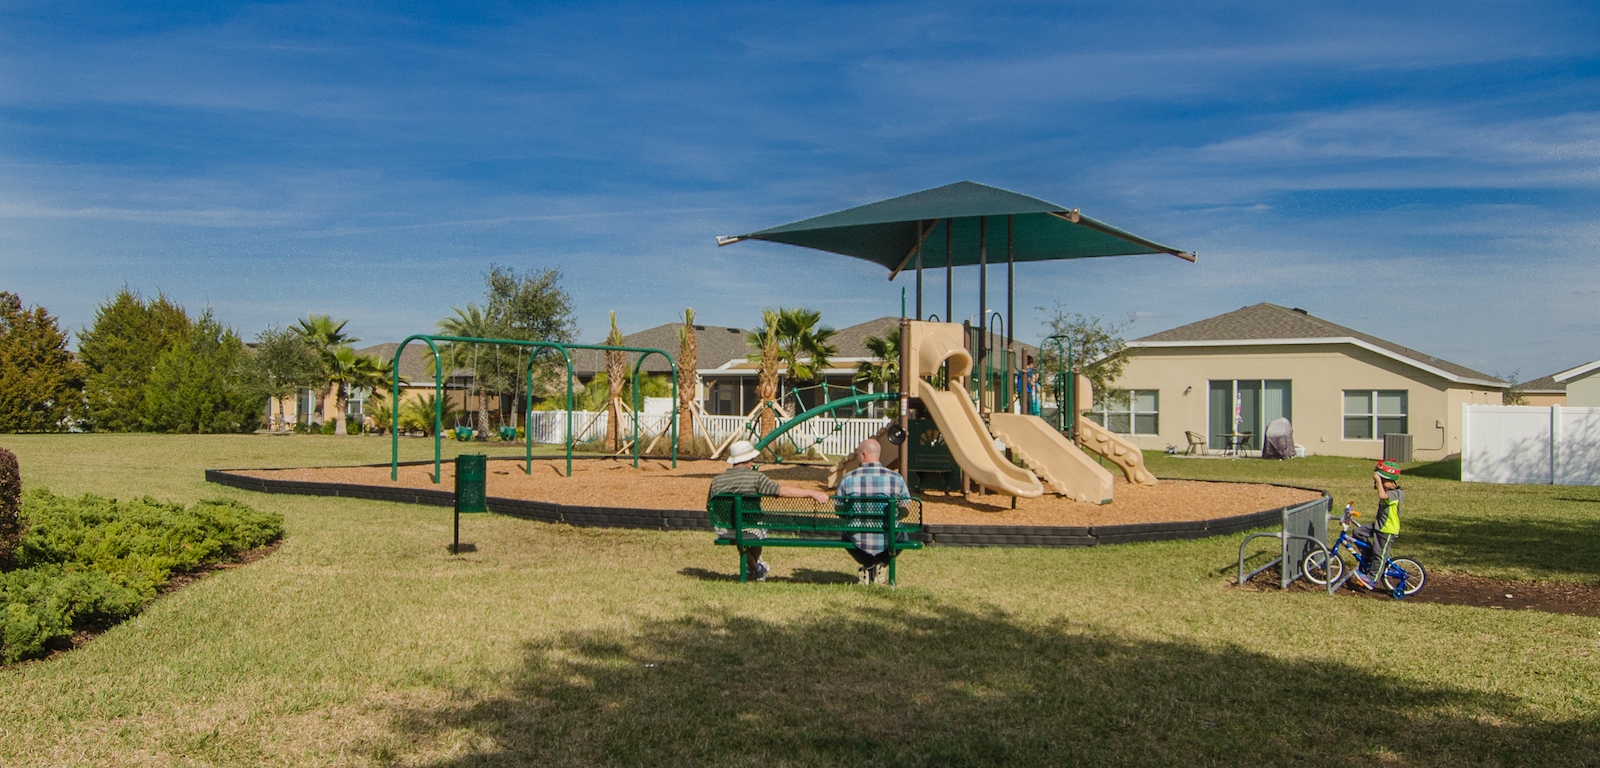 Trillium - playground with slides